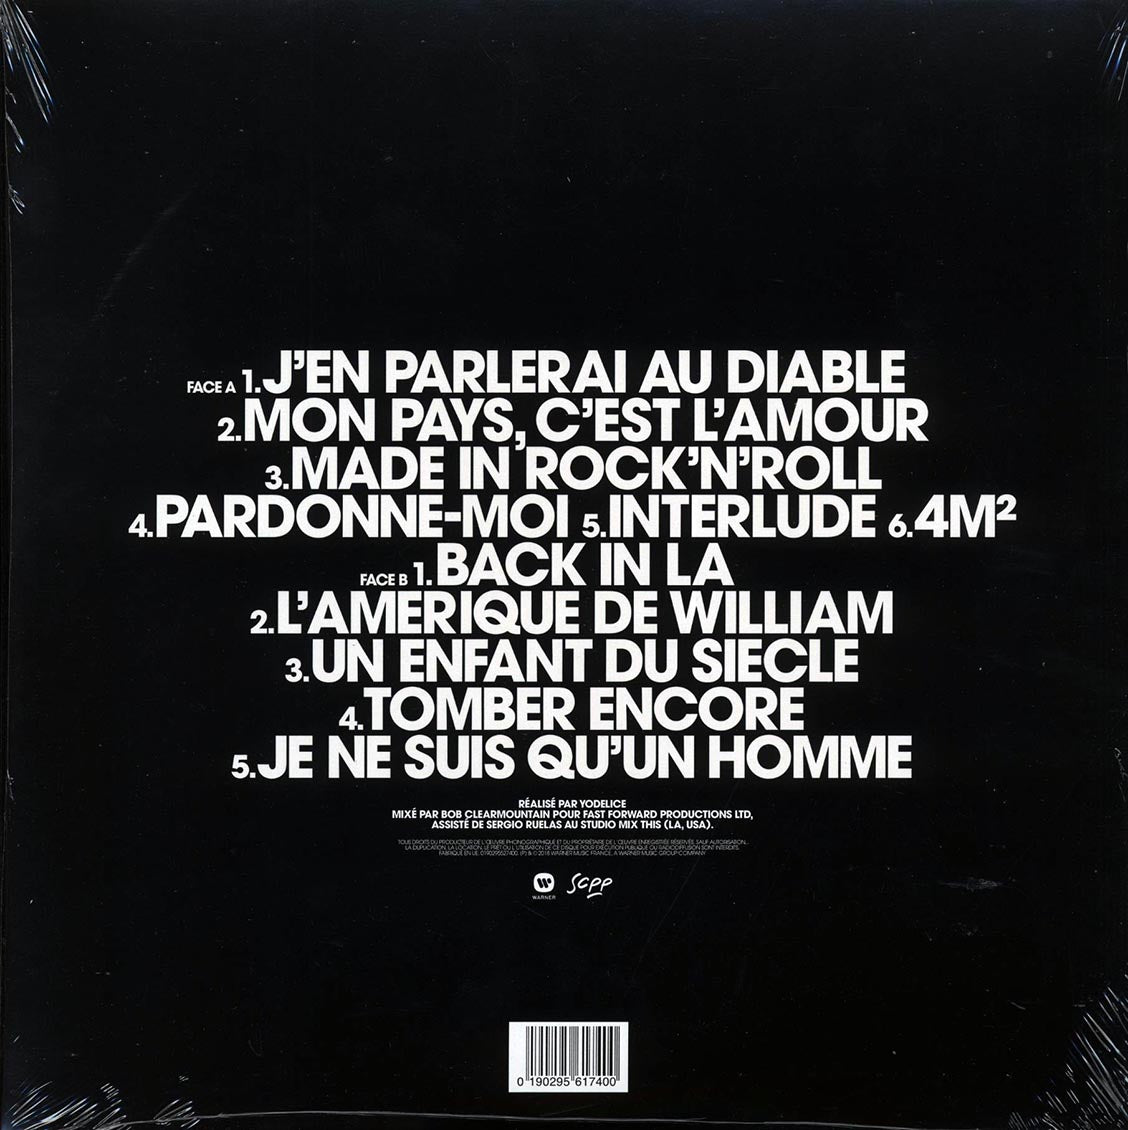 Johnny Hallyday - Mon Pays C'est L'amour [2018 Limited White] [New Vinyl Record LP]